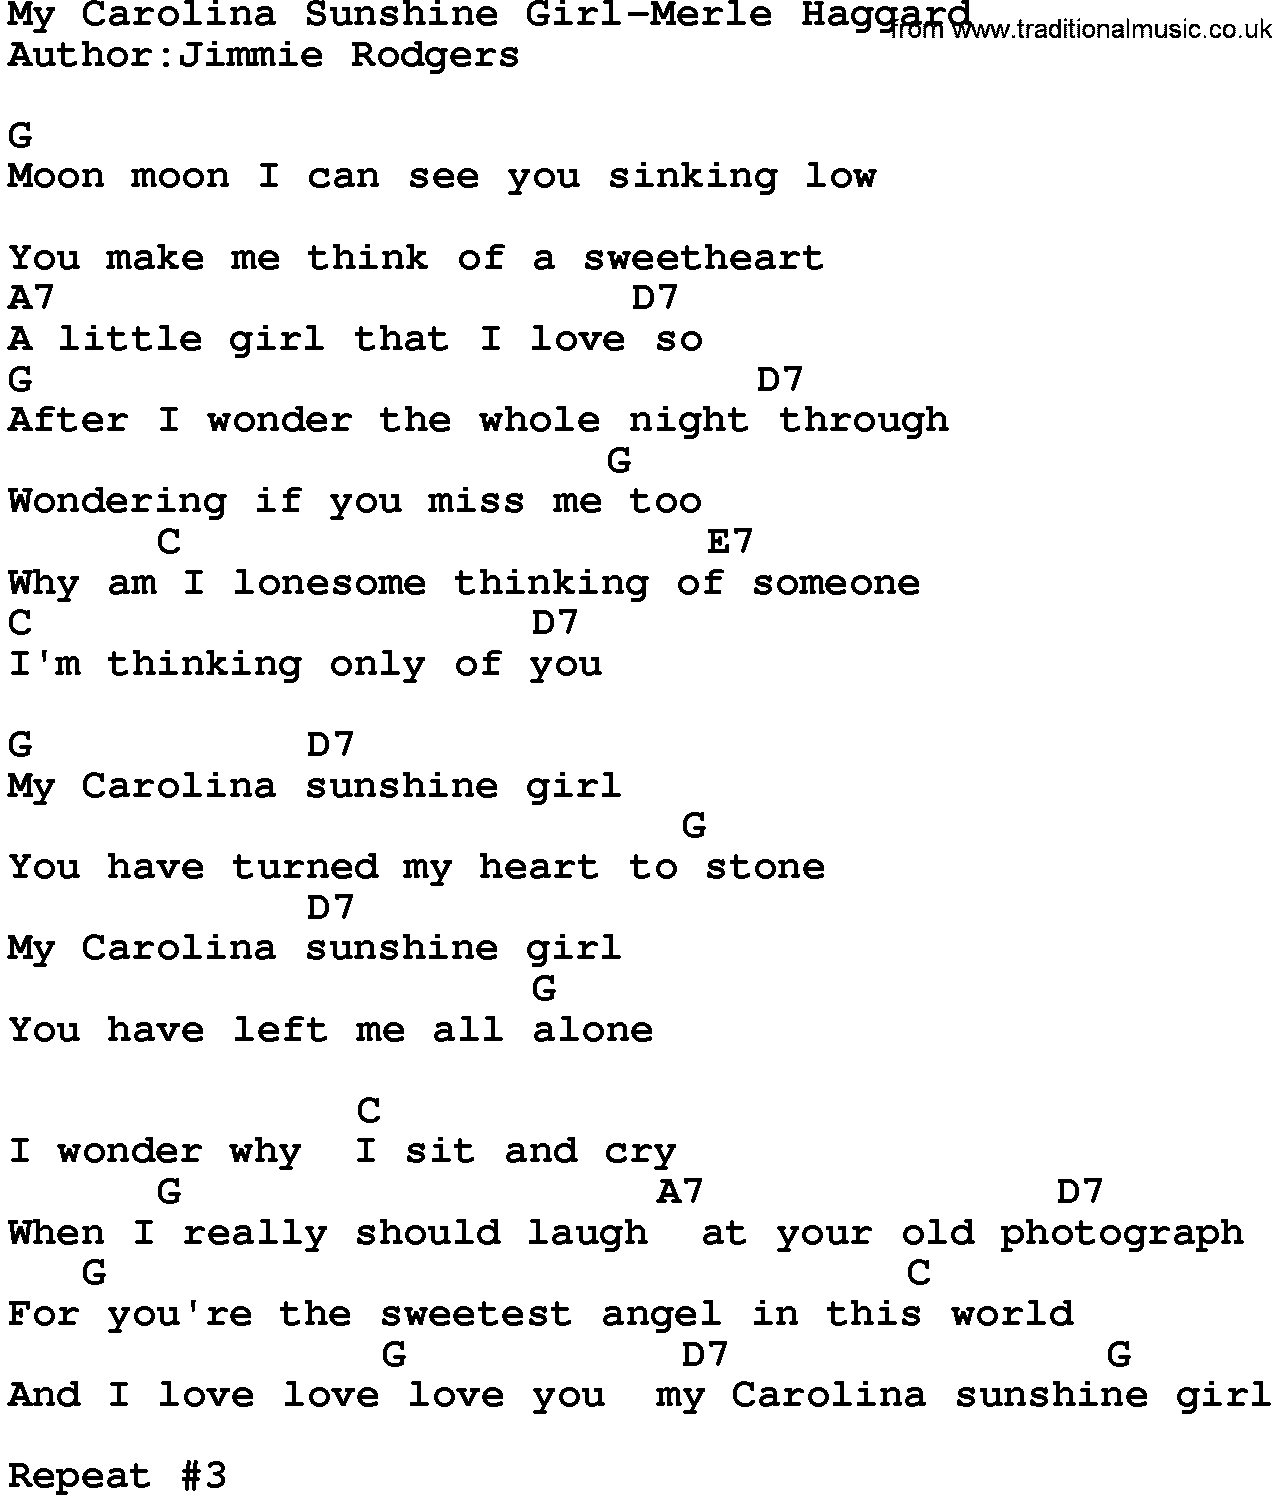 Country music song: My Carolina Sunshine Girl-Merle Haggard lyrics and chords